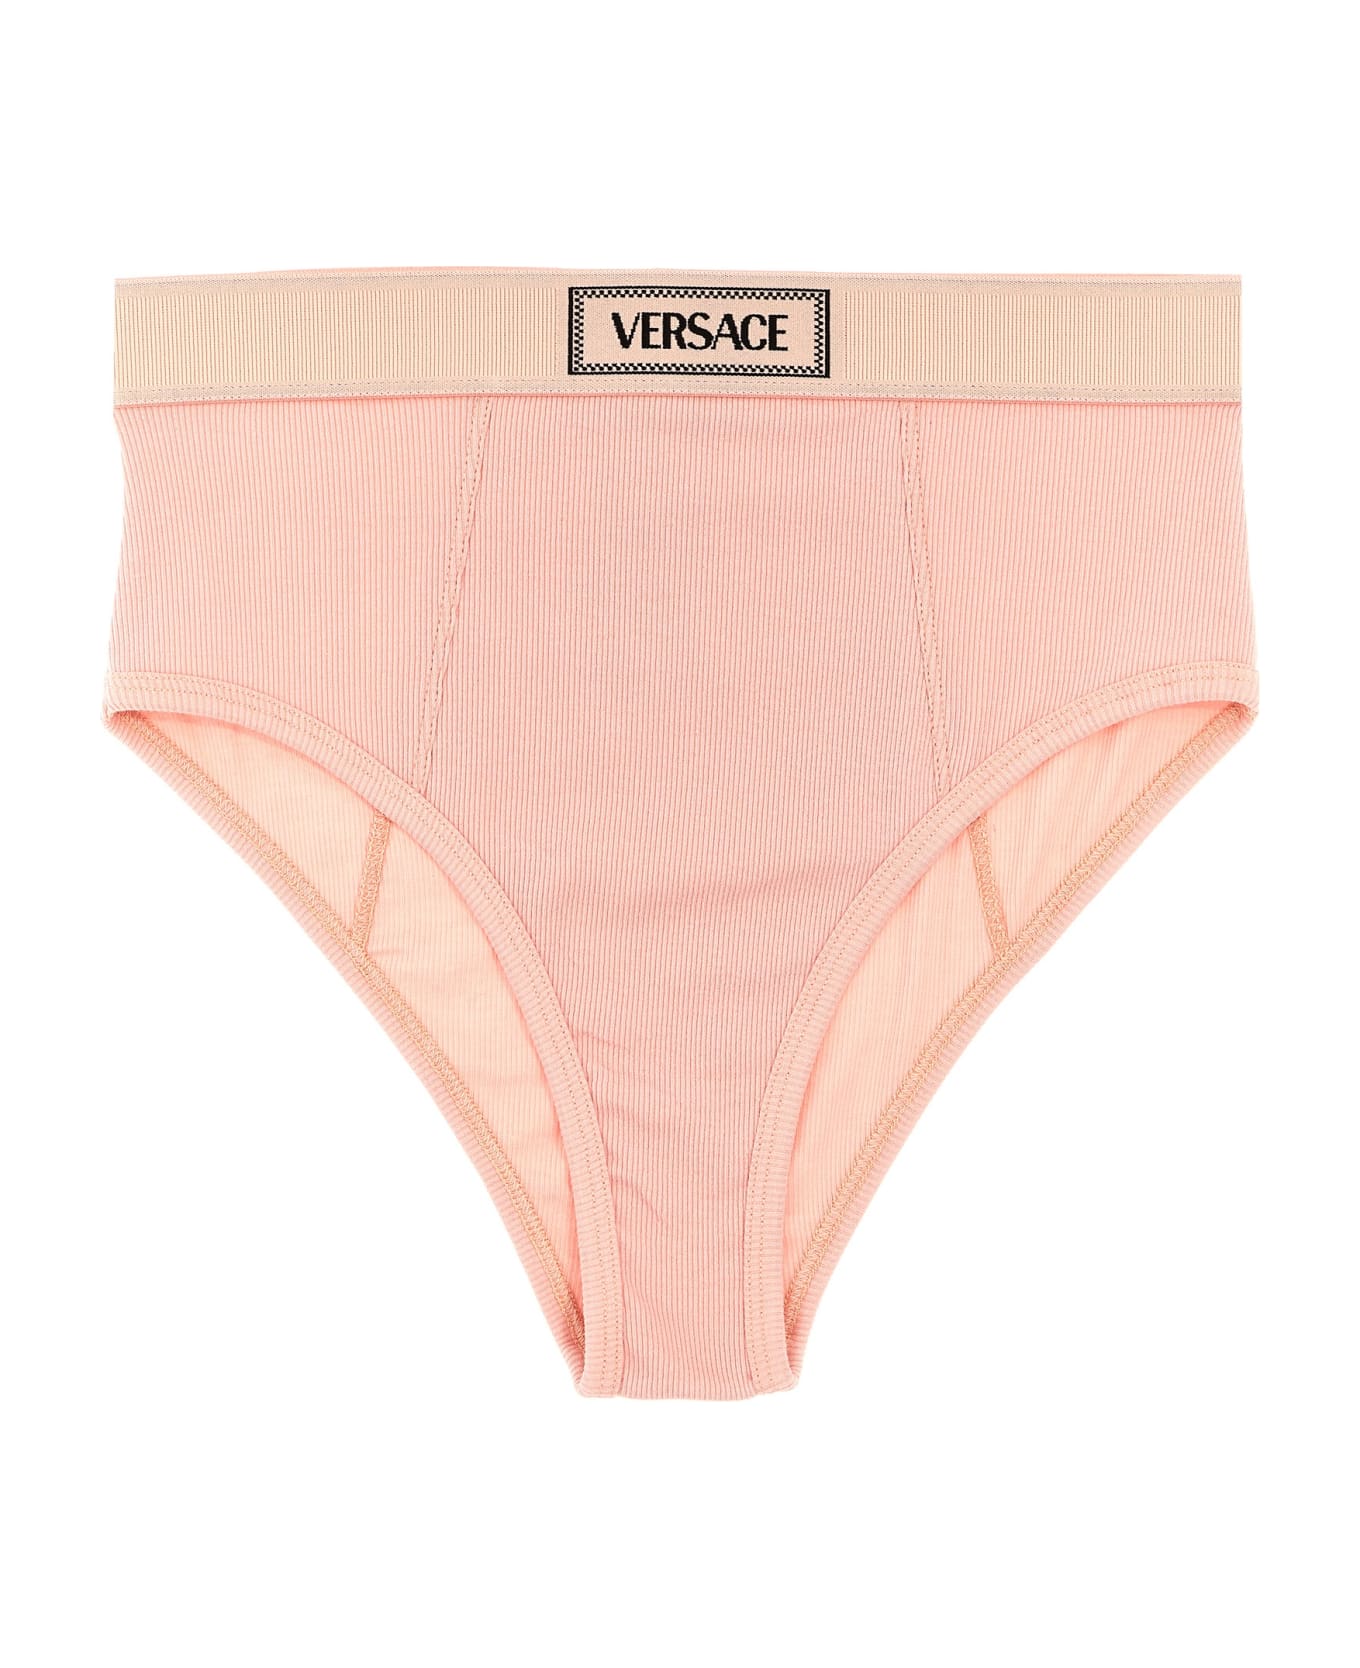 Versace '90s Vintage' Briefs - Pink ショーツ